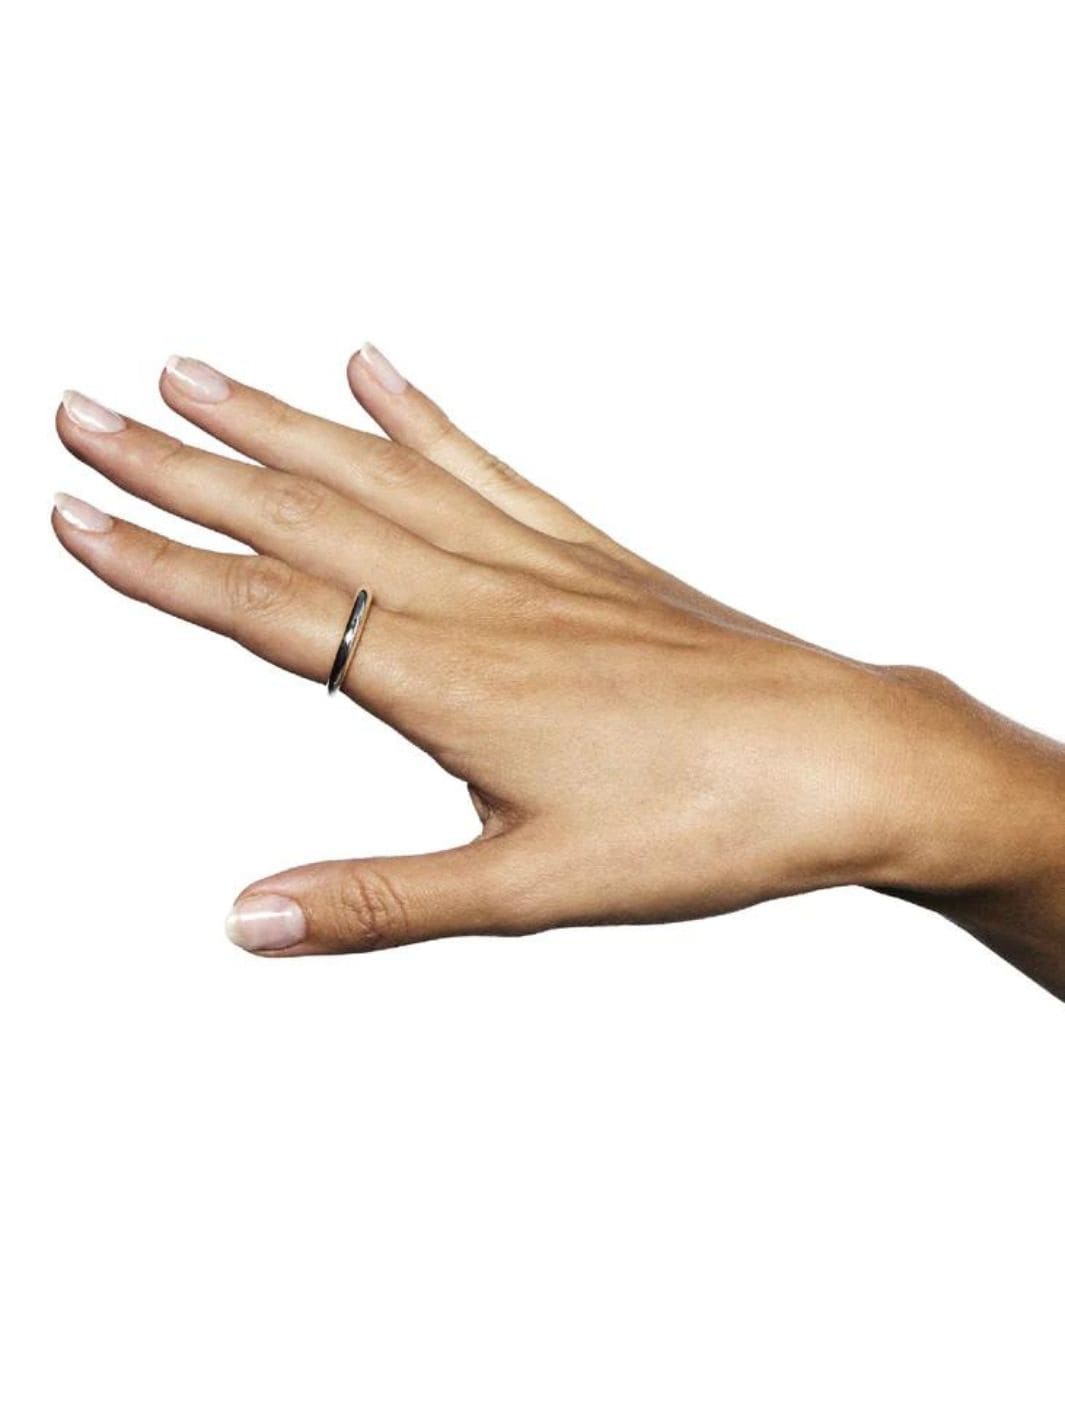 Lié Studio Accessories Ring | The Nanna Ring Silver